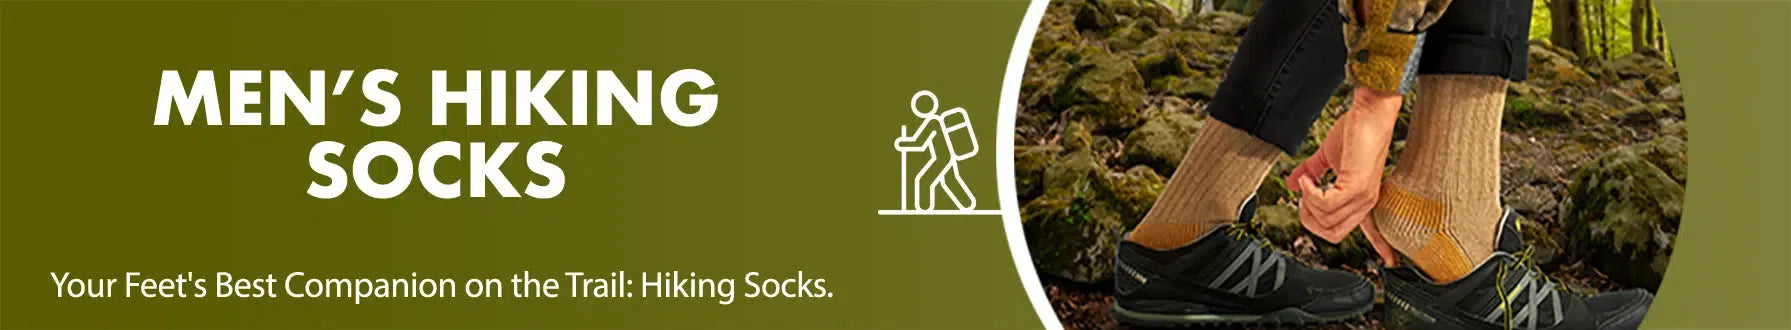 GoWith men's hiking socks collection banner desktop